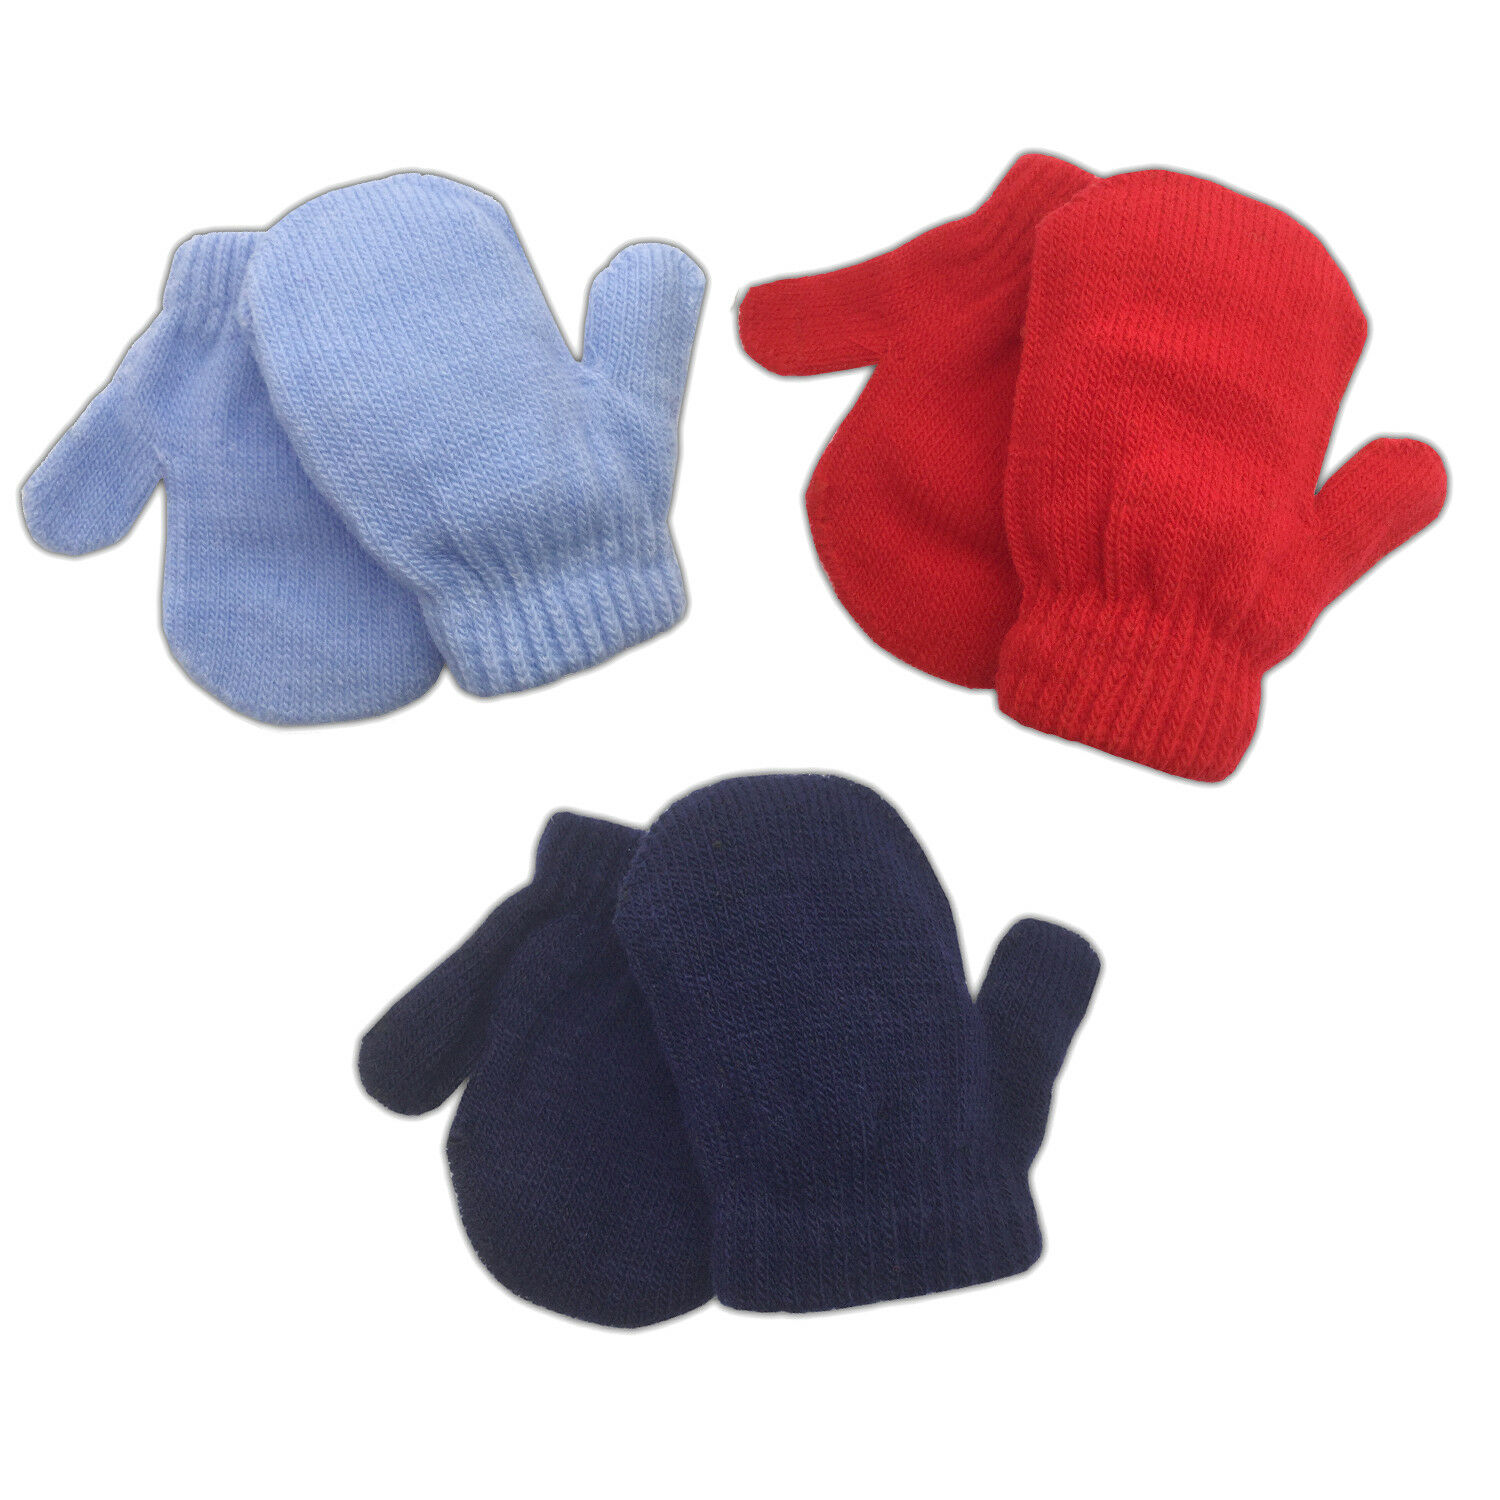 Children Toddler Winter Gloves Mittens Knitted For Winter Boys Girls 0-6 Months